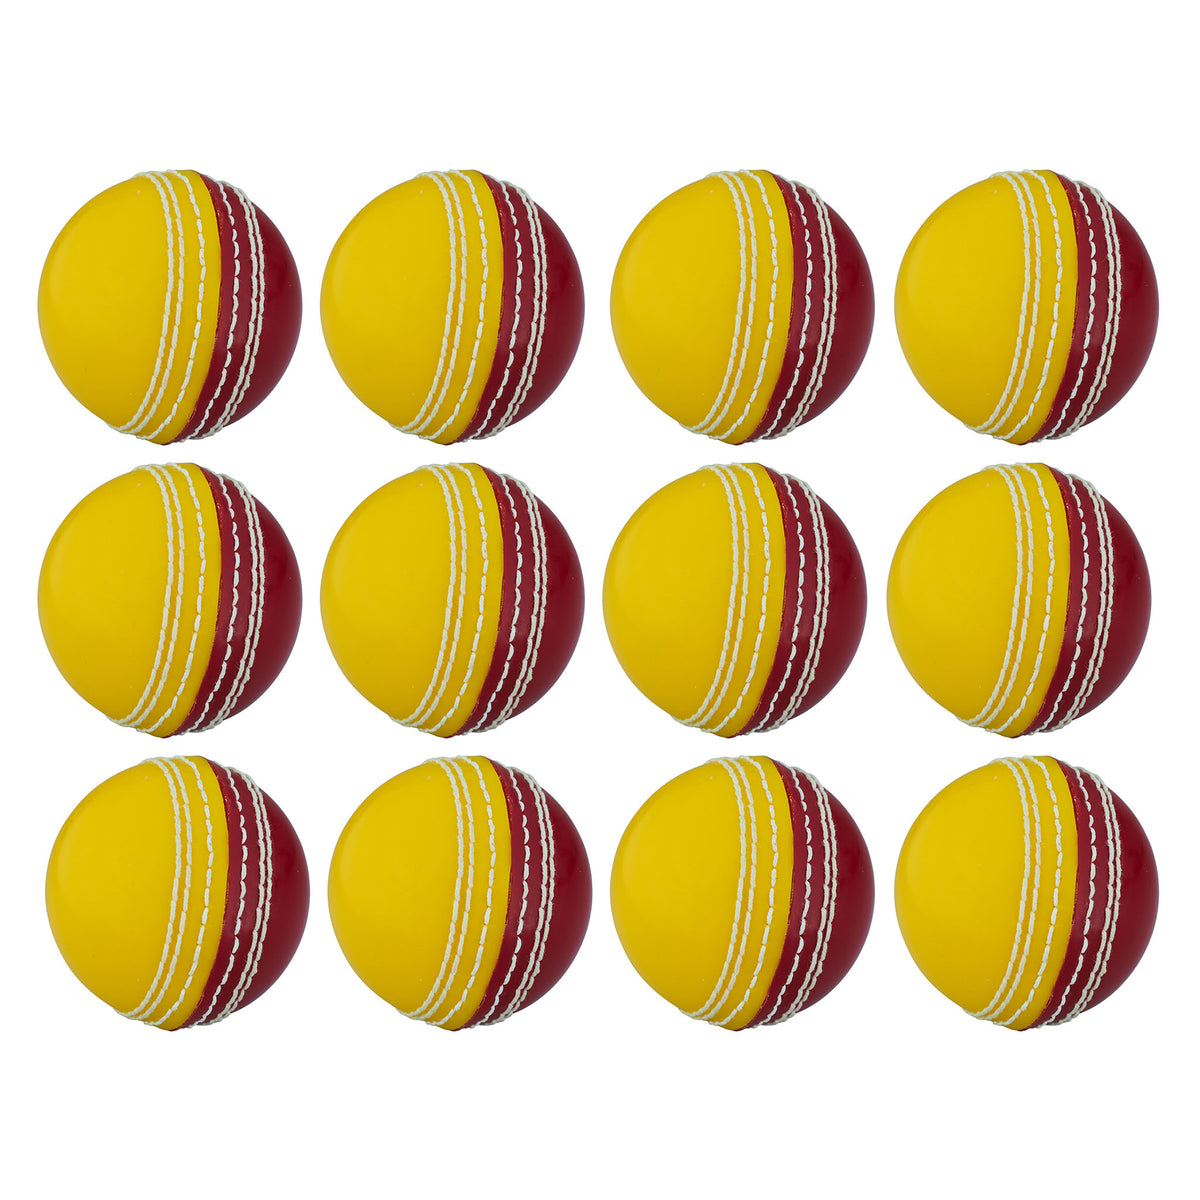 Readers Supaball Junior Cricket Ball Box of 12: Red/Yellow